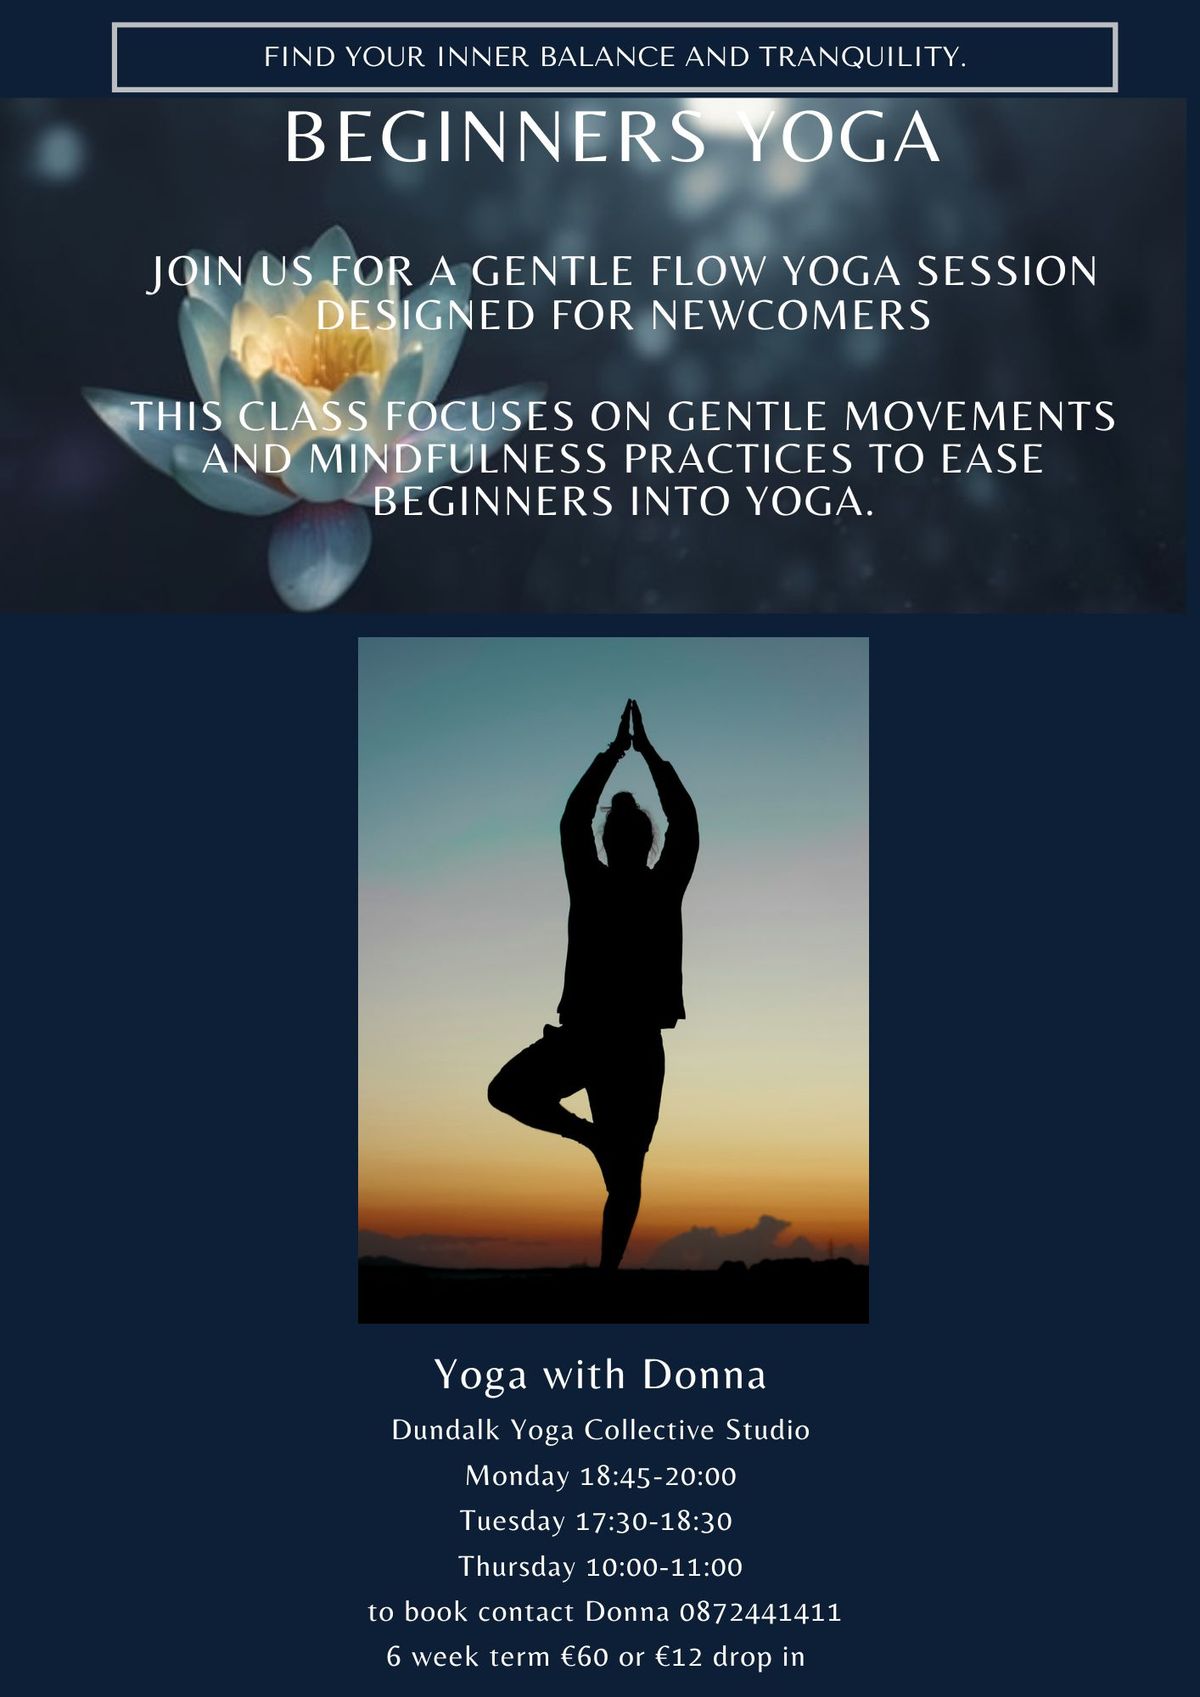 Beginners Yoga - A Gentle Flow Yoga Session & Meditation